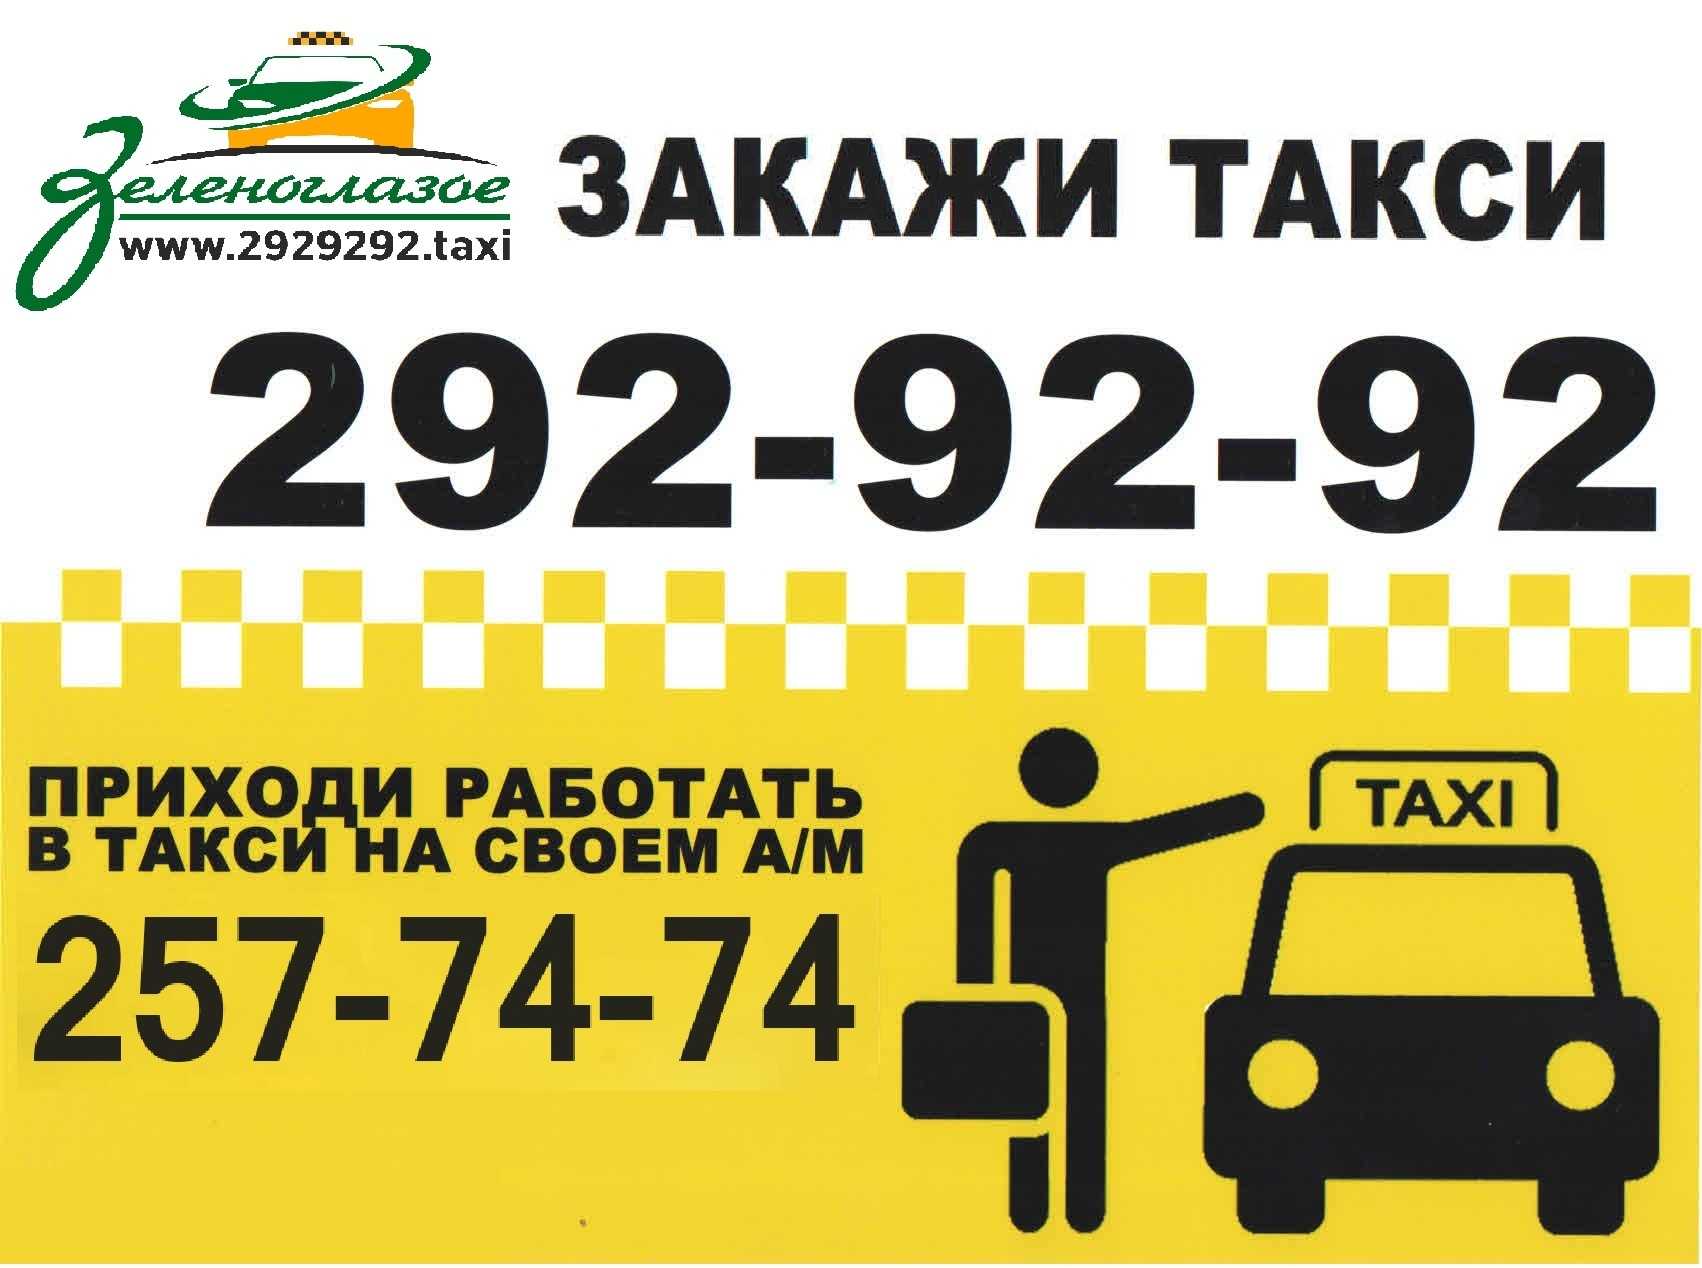 Закажи такси. Самое дешевое такси номер. Такси Уфа. Номер недорогого такси.